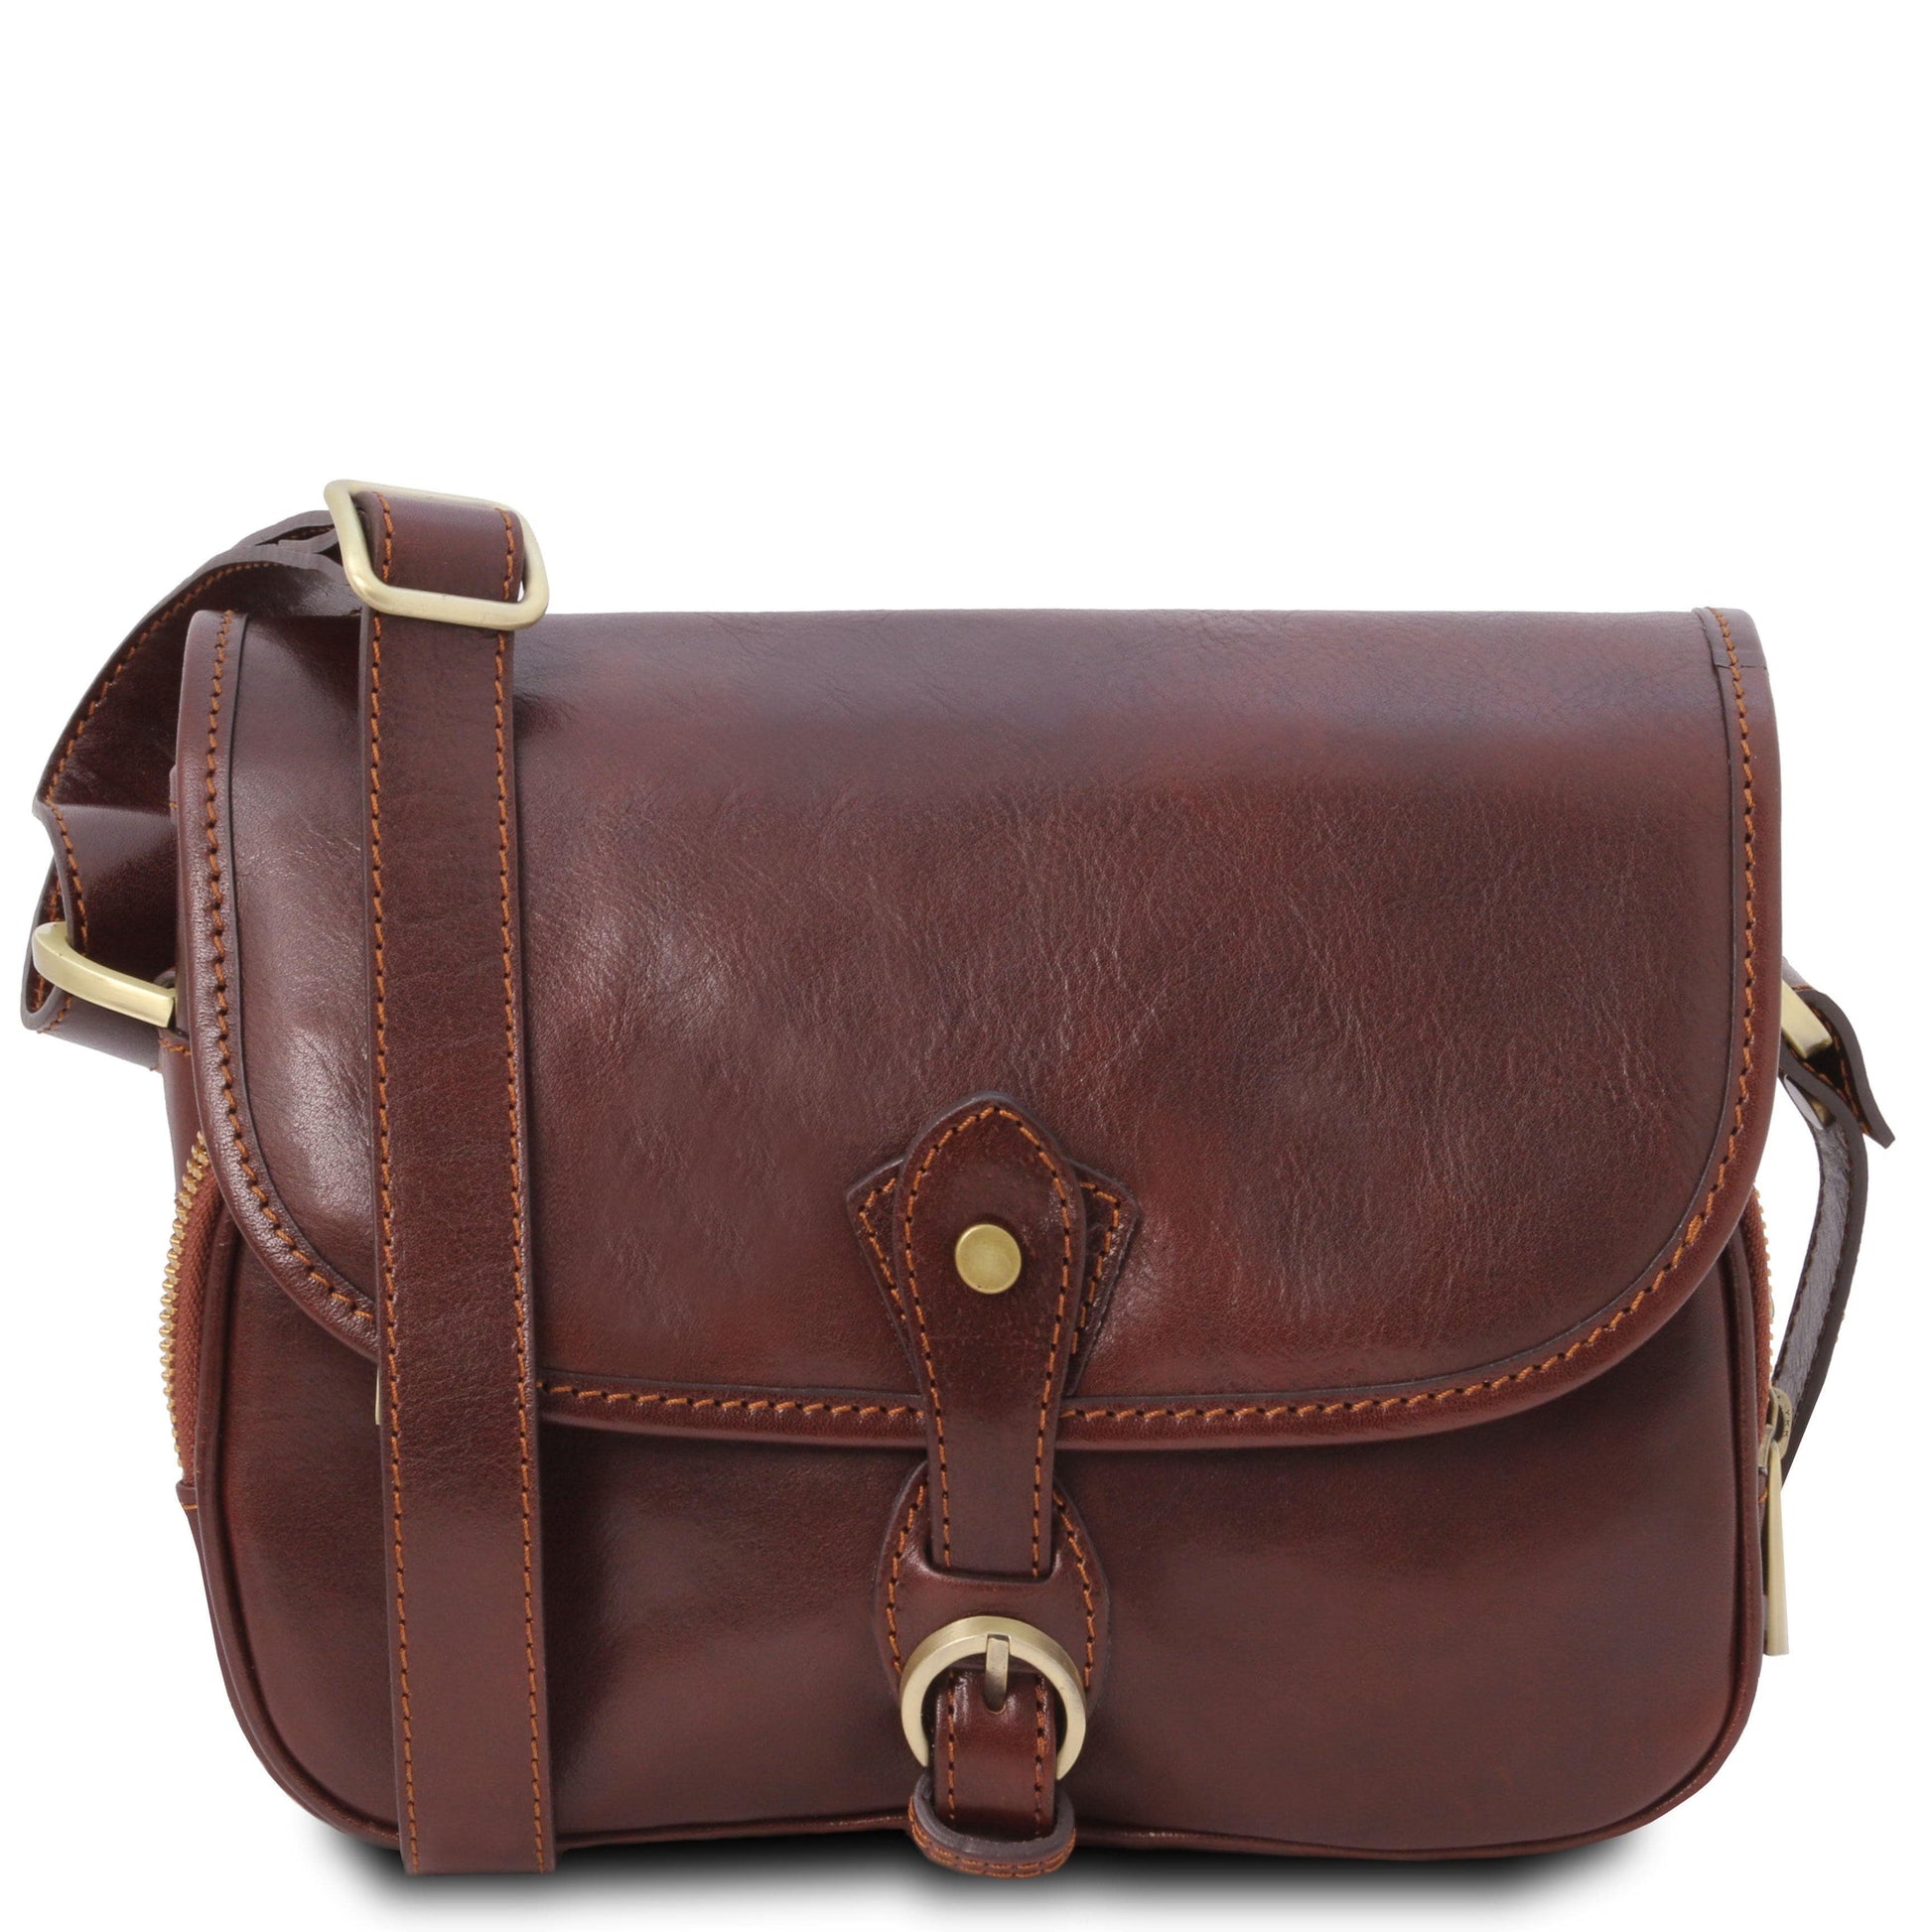 Alessia - Leather shoulder bag | TL142020 - Premium Leather shoulder bags - Just €219.60! Shop now at San Rocco Italia